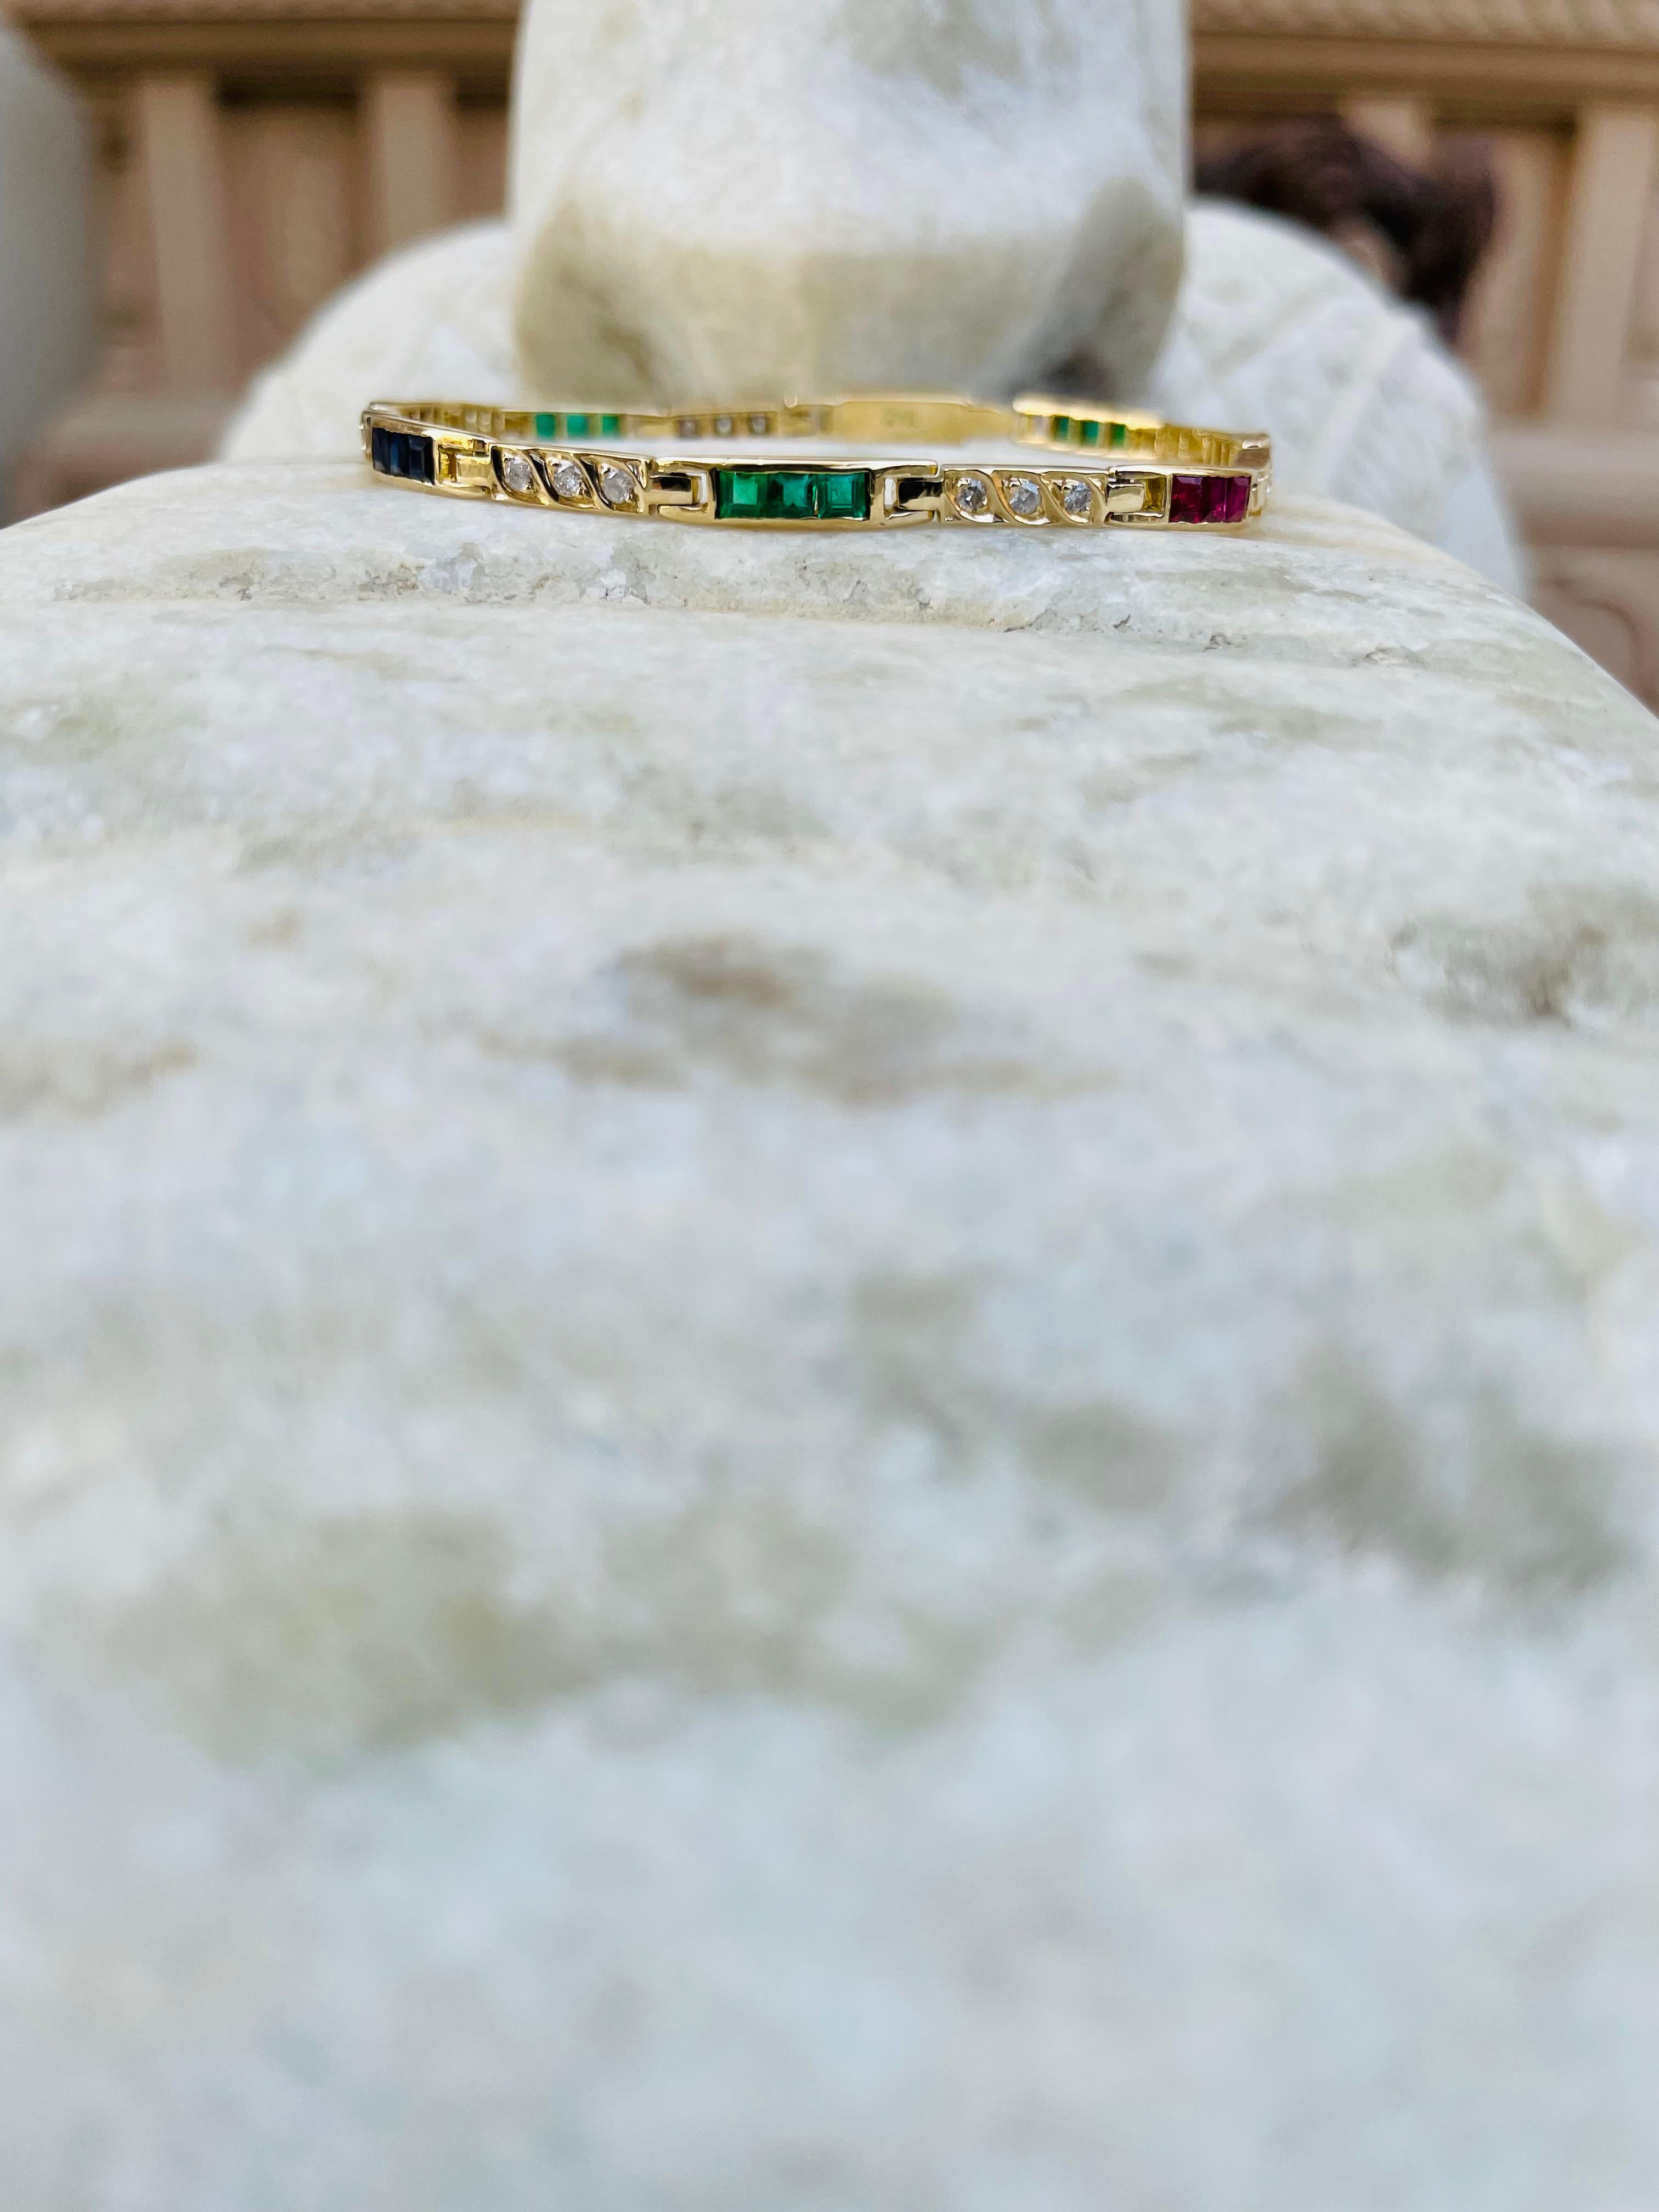 emerald and sapphire bracelet